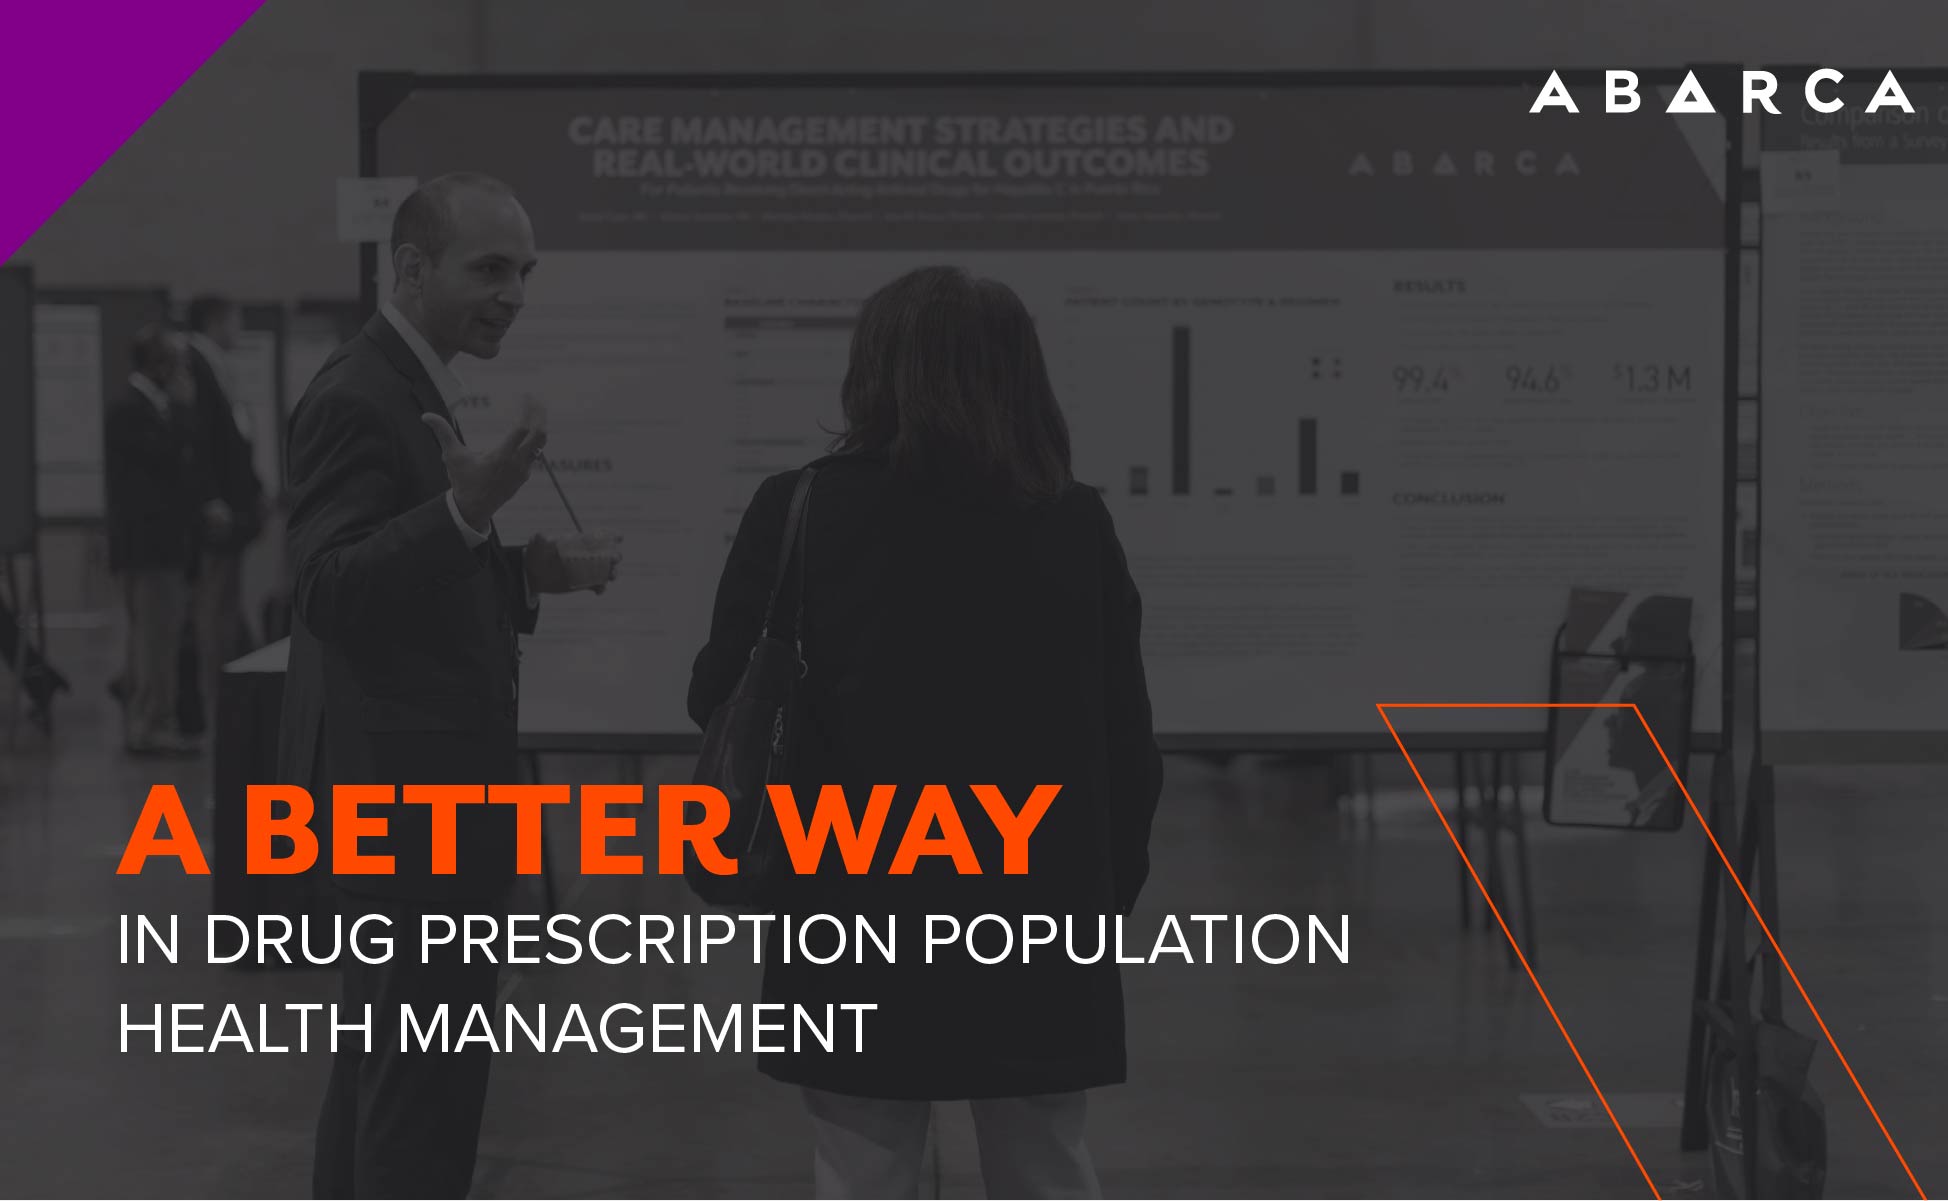 Abarca Health: A Better Way in Drug Prescription Population Health Management